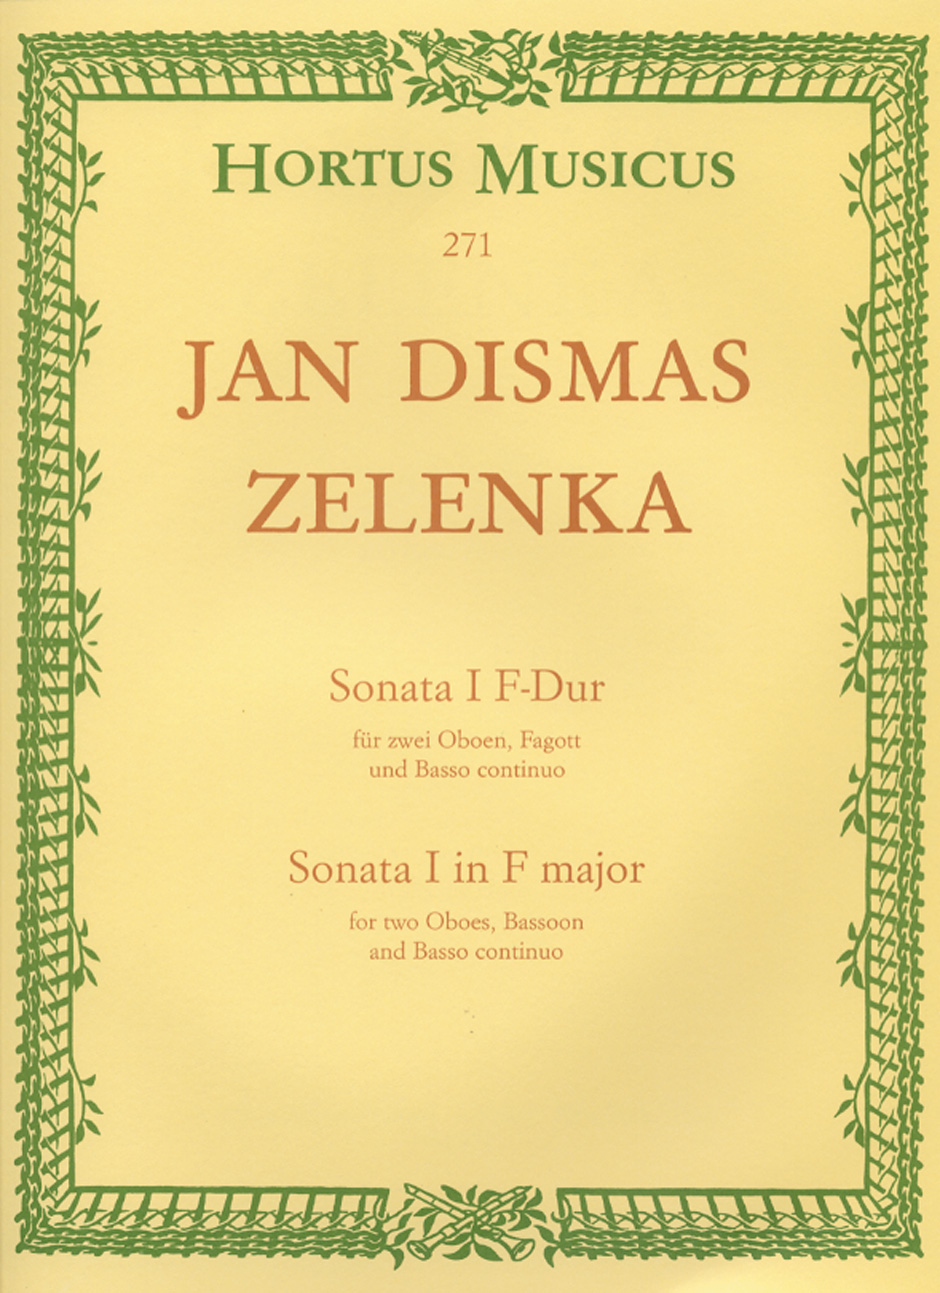 Sonata I F-Dur Für Zwei Oboen, Fagott Und Basso Continuo (ZELENKA JAN DISMAS)